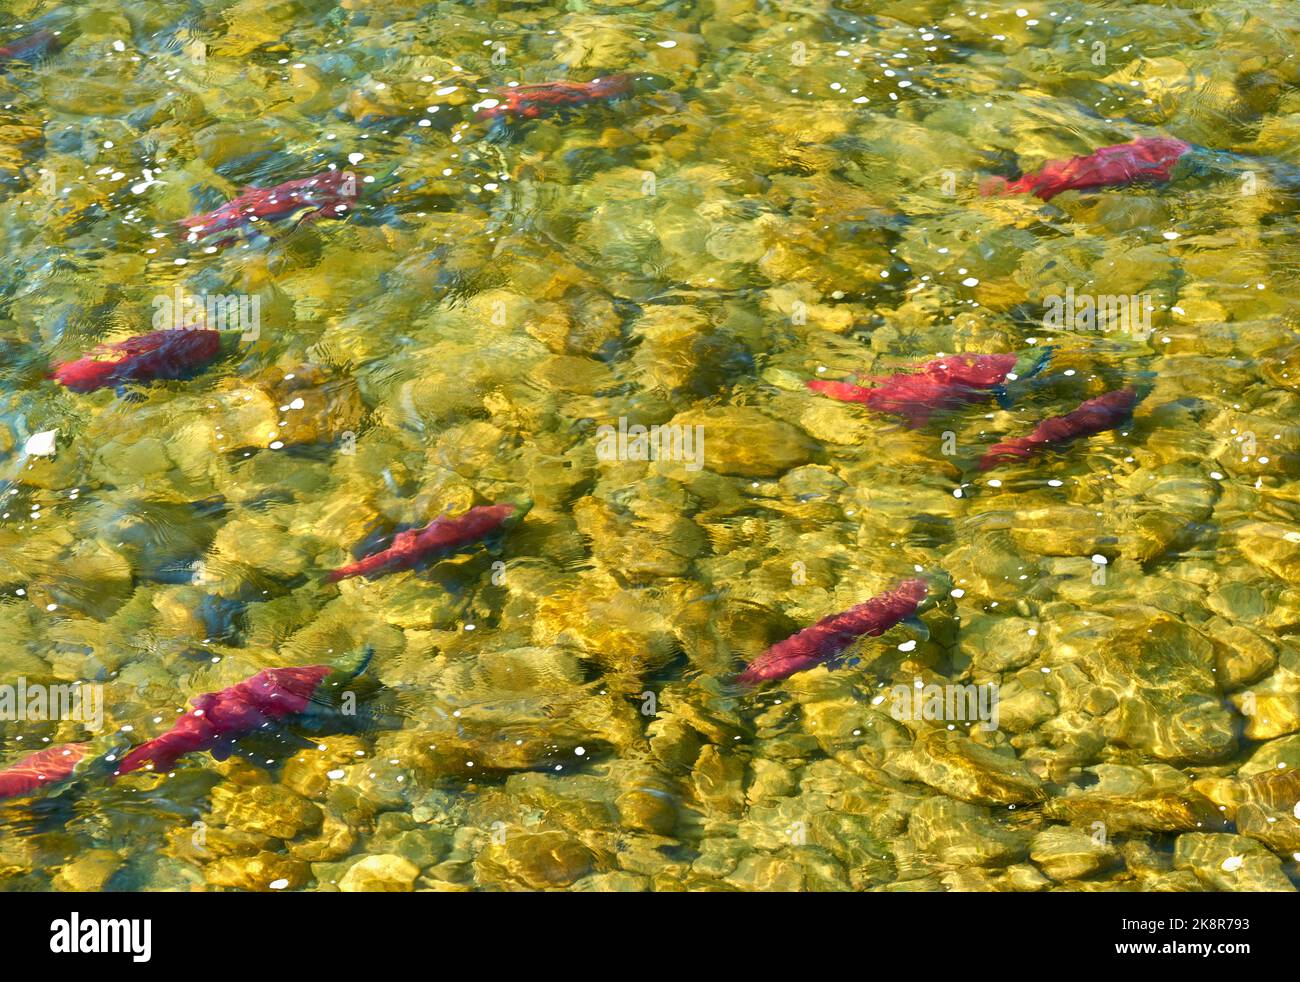 School of Spawning Sockeye Salmon. Sockeye salmon swimming up the Adams River to spawn. British Columbia, Canada. Stock Photo